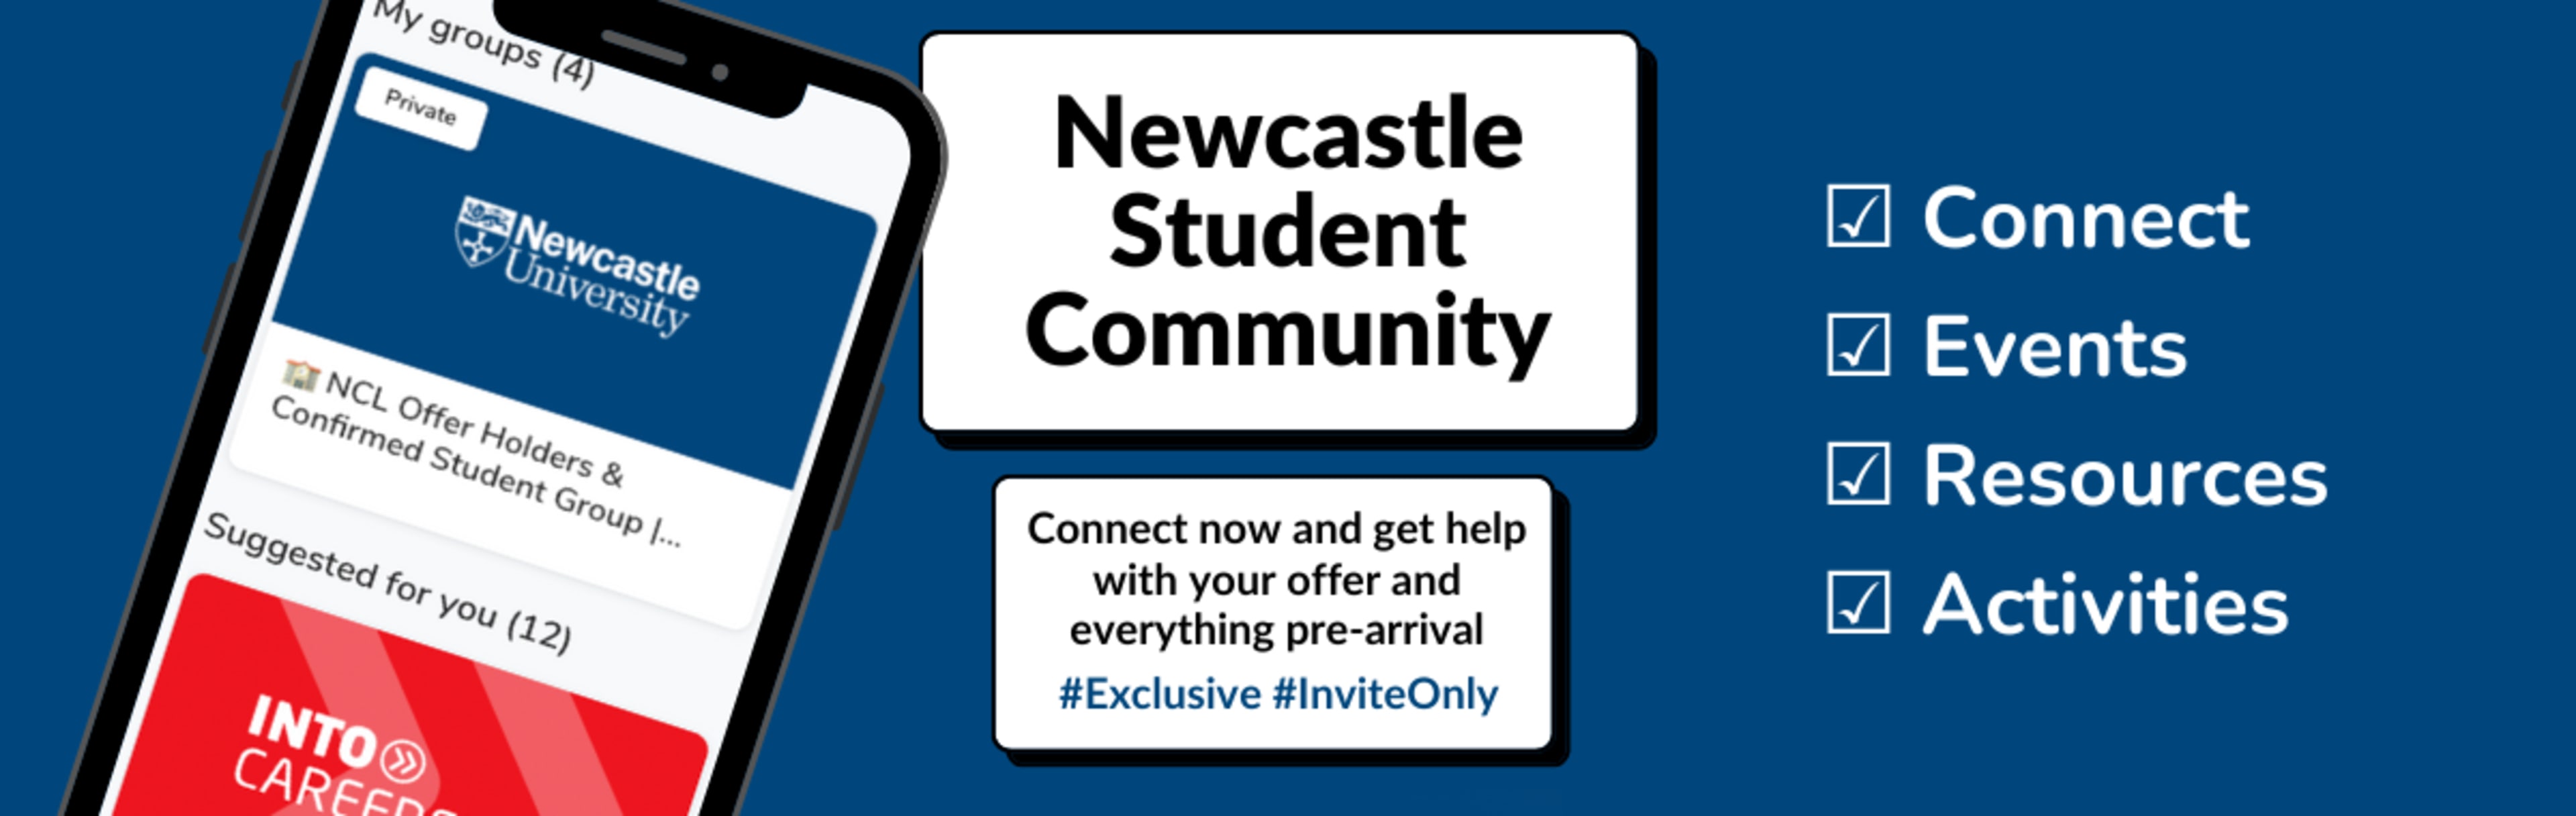 Newcastle Student Community